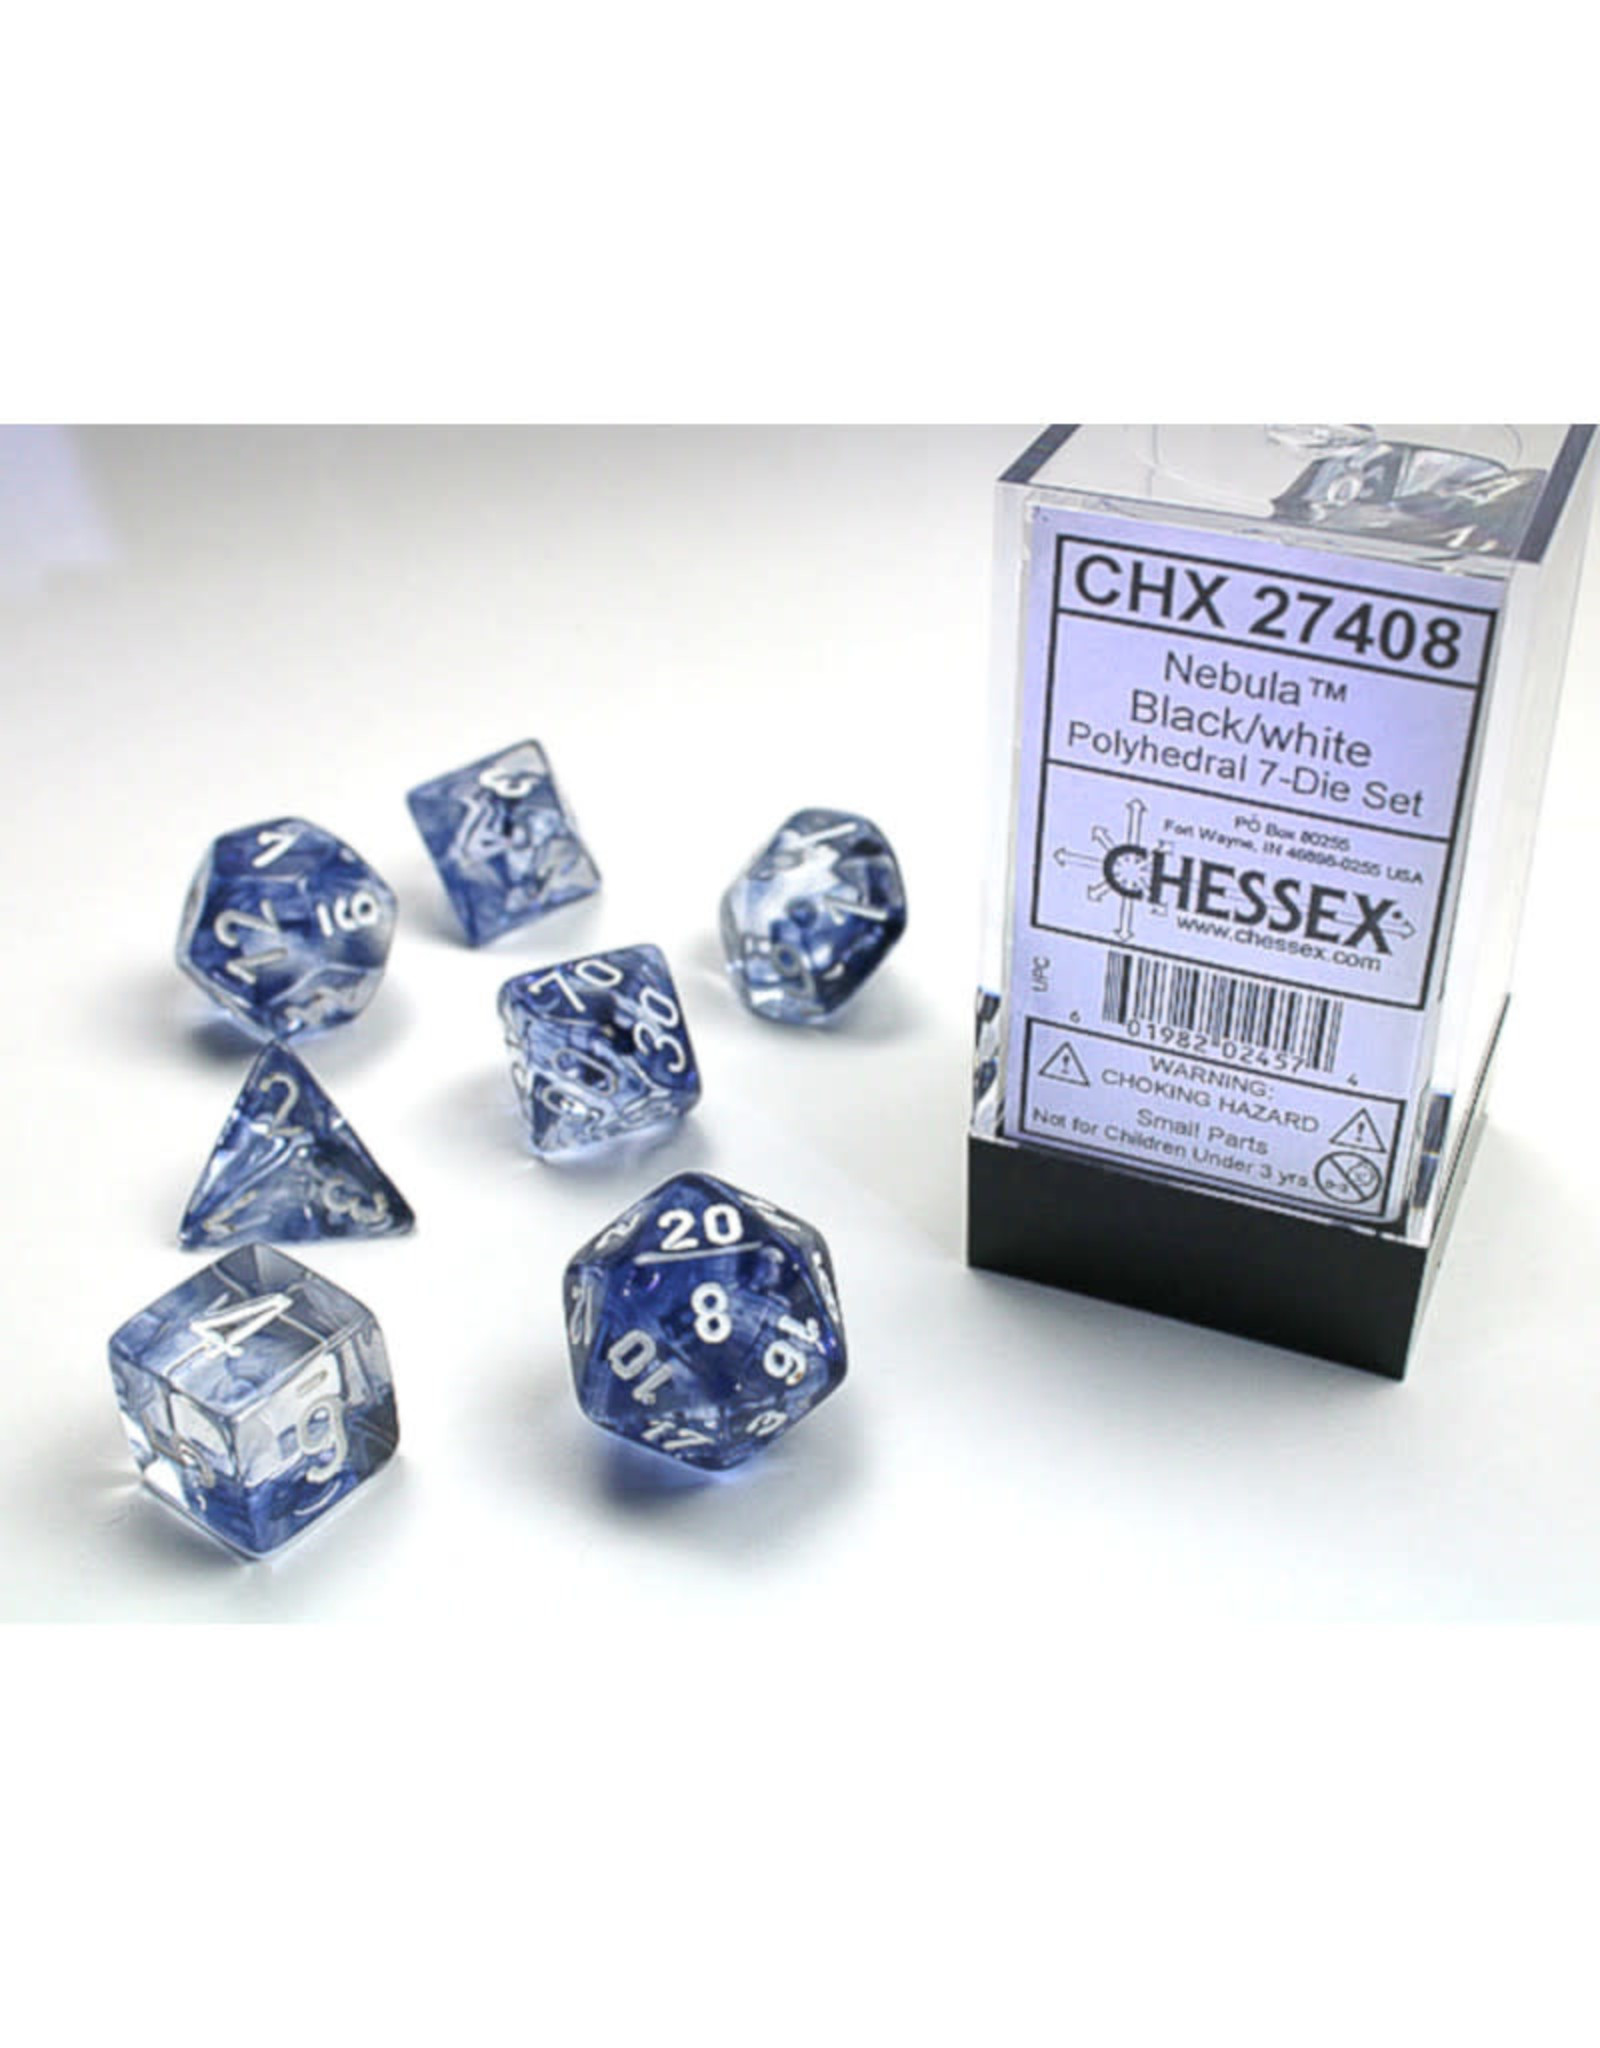 Chessex Polyhedral Dice Set: Nebula Black/White (7)